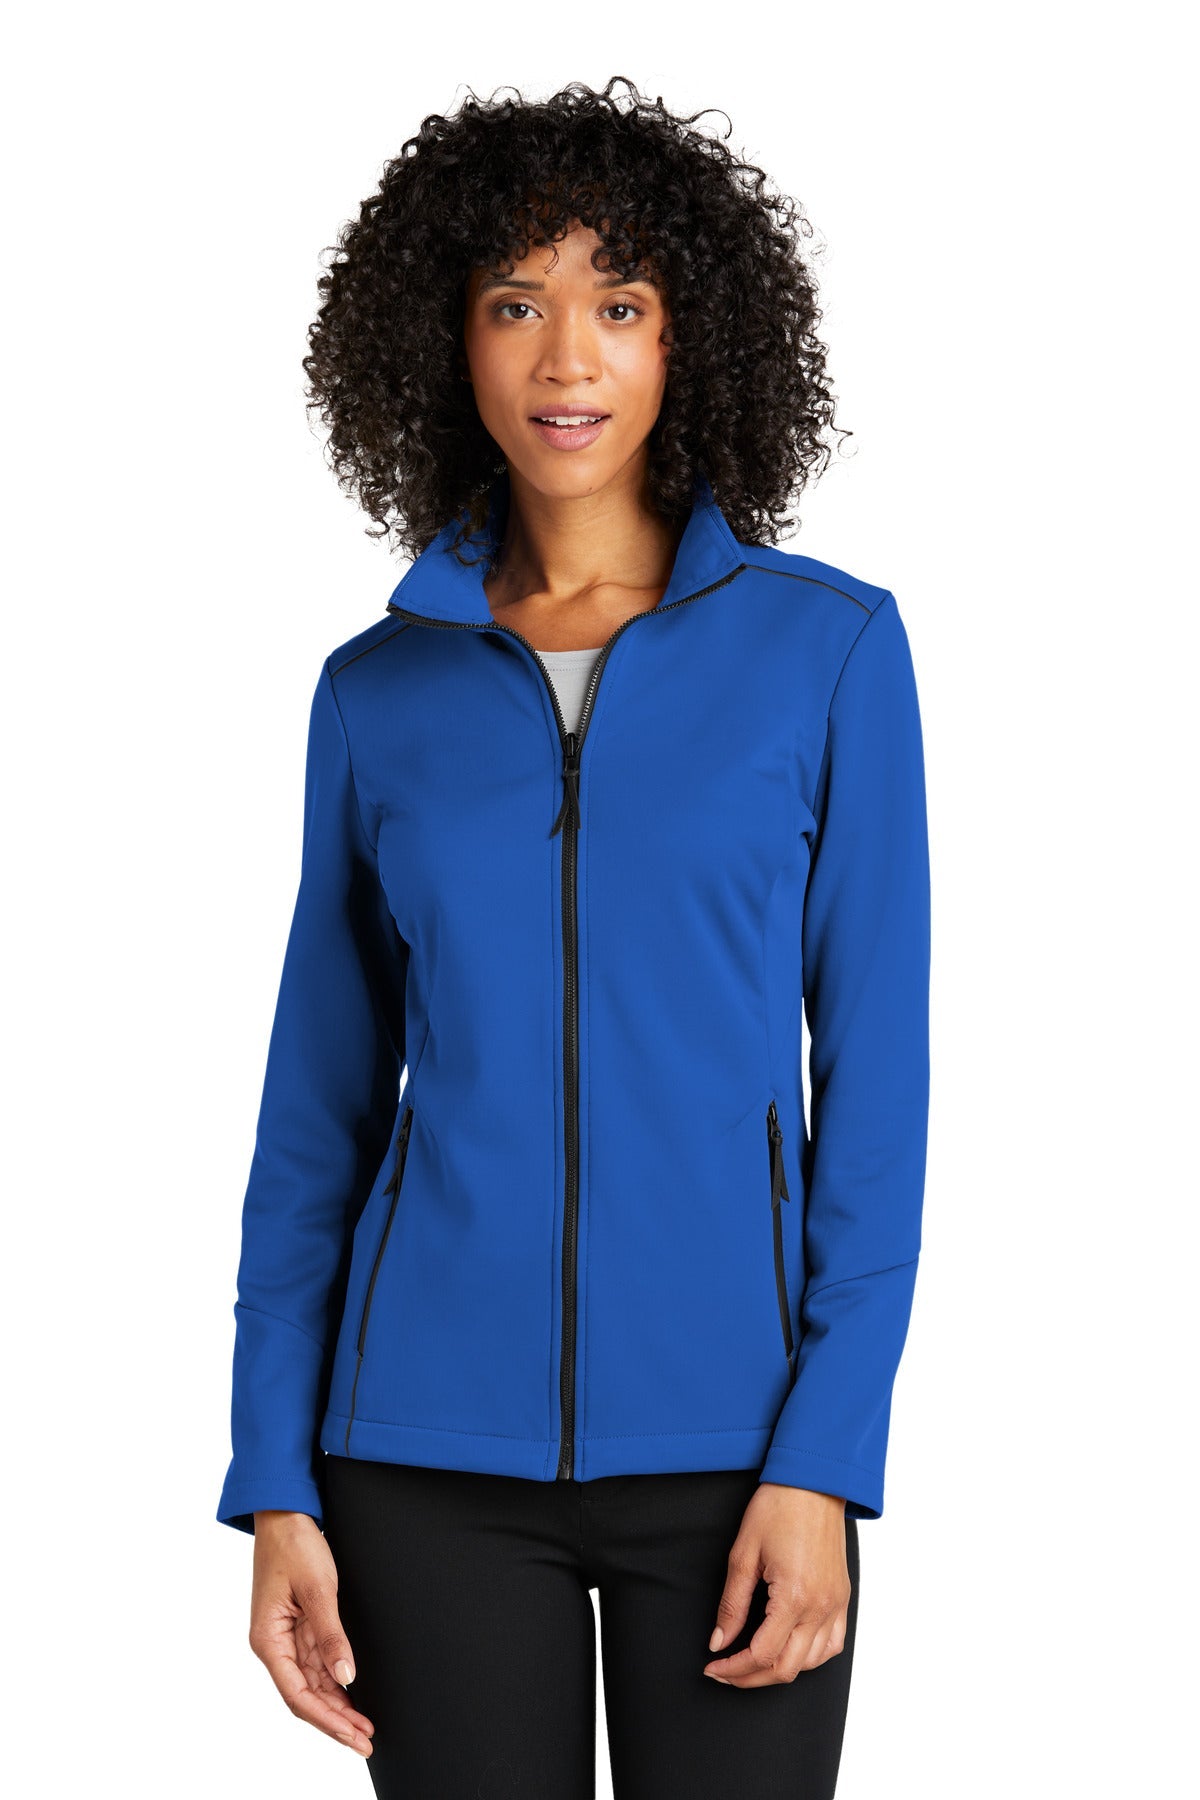 Port Authority® Ladies Collective Tech Soft Shell Jacket L921 - DFW Impression